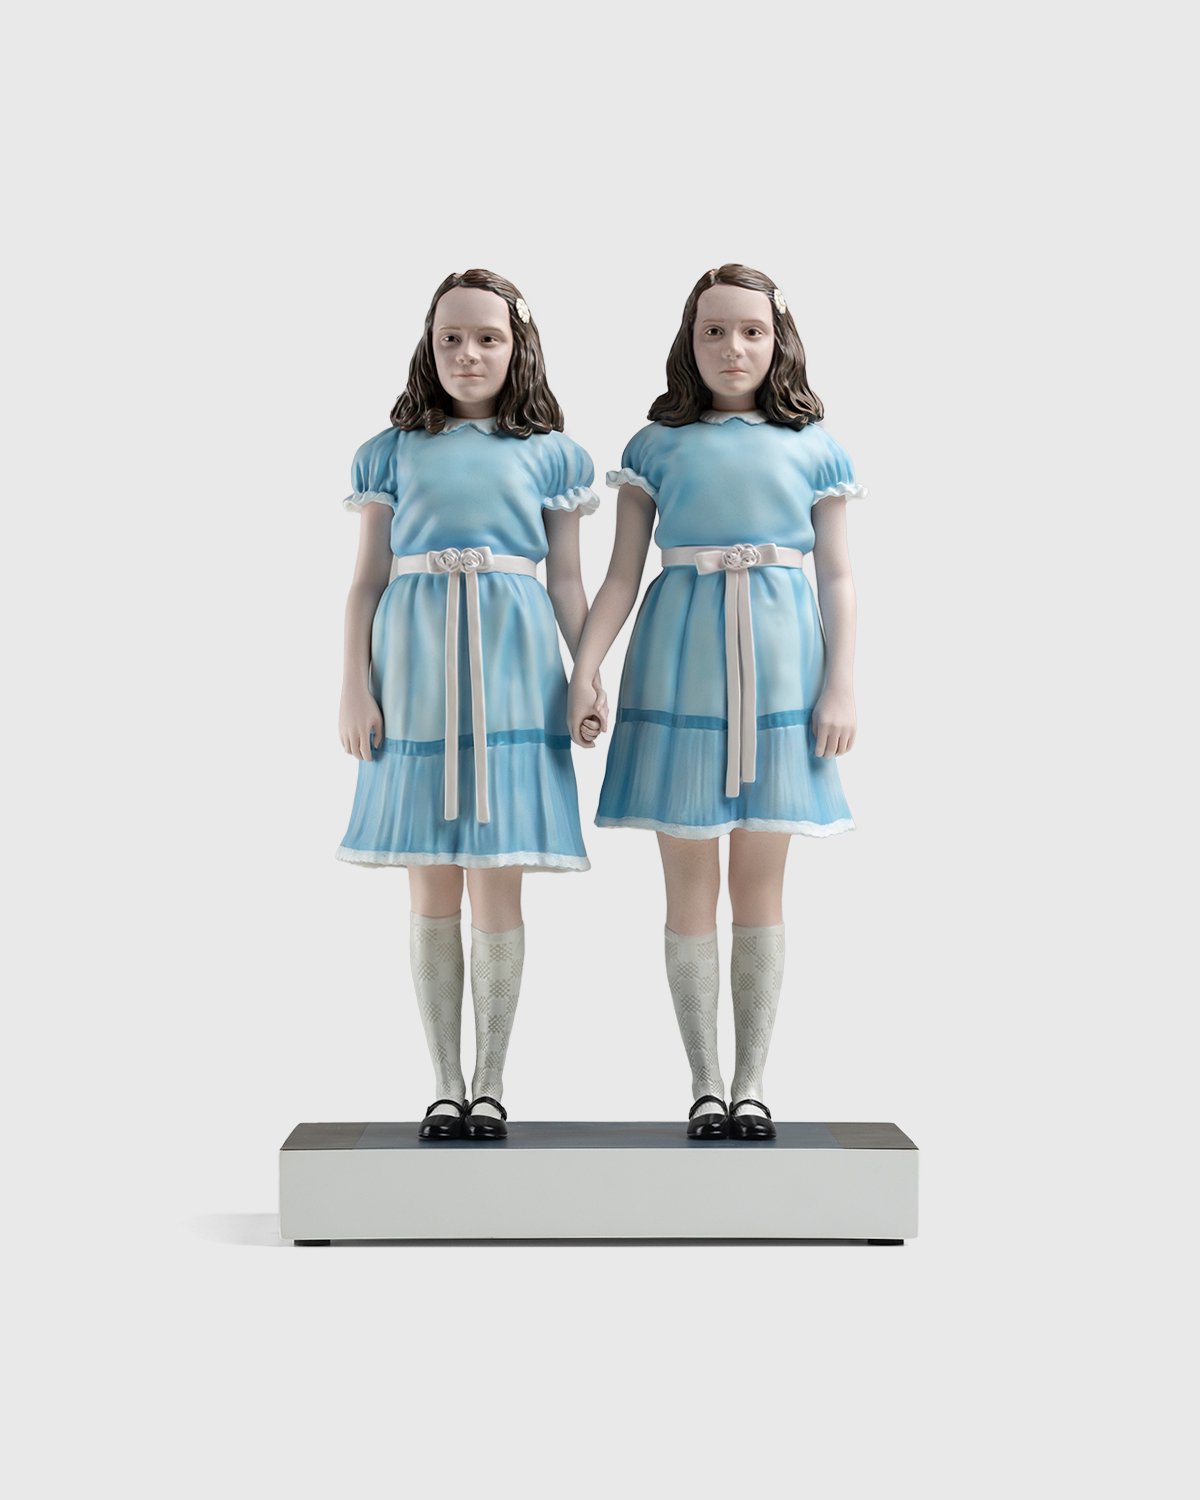 Medicom - The Shining Twins Statue Multi - Lifestyle - Multi - Image 1